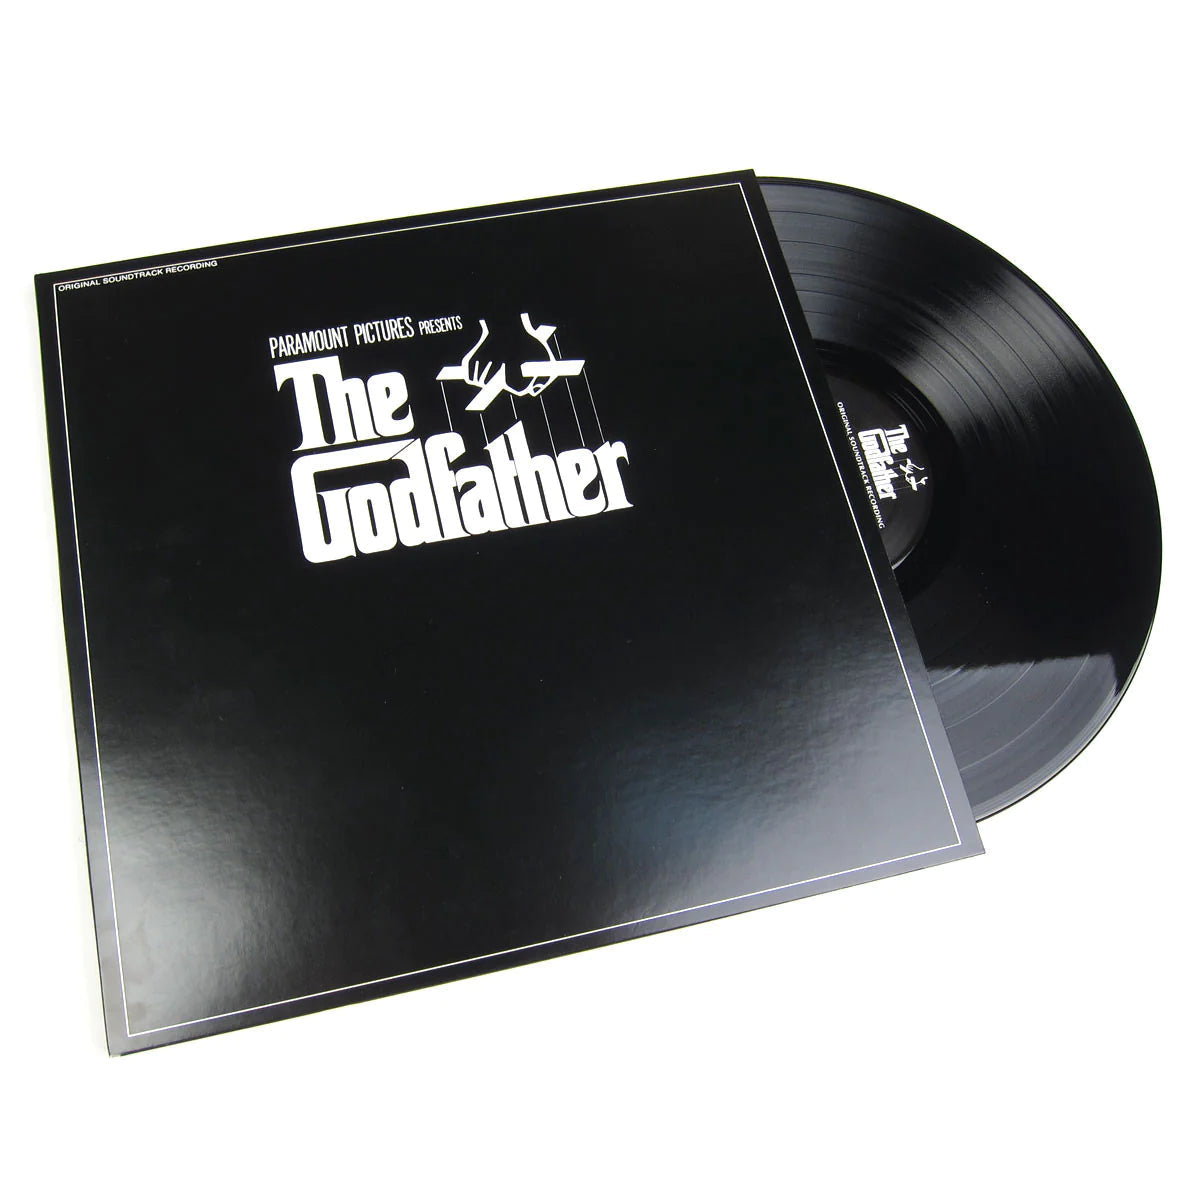 The Godfather (Original Soundtrack Recording) by Nino Rota (Vinyl LP)